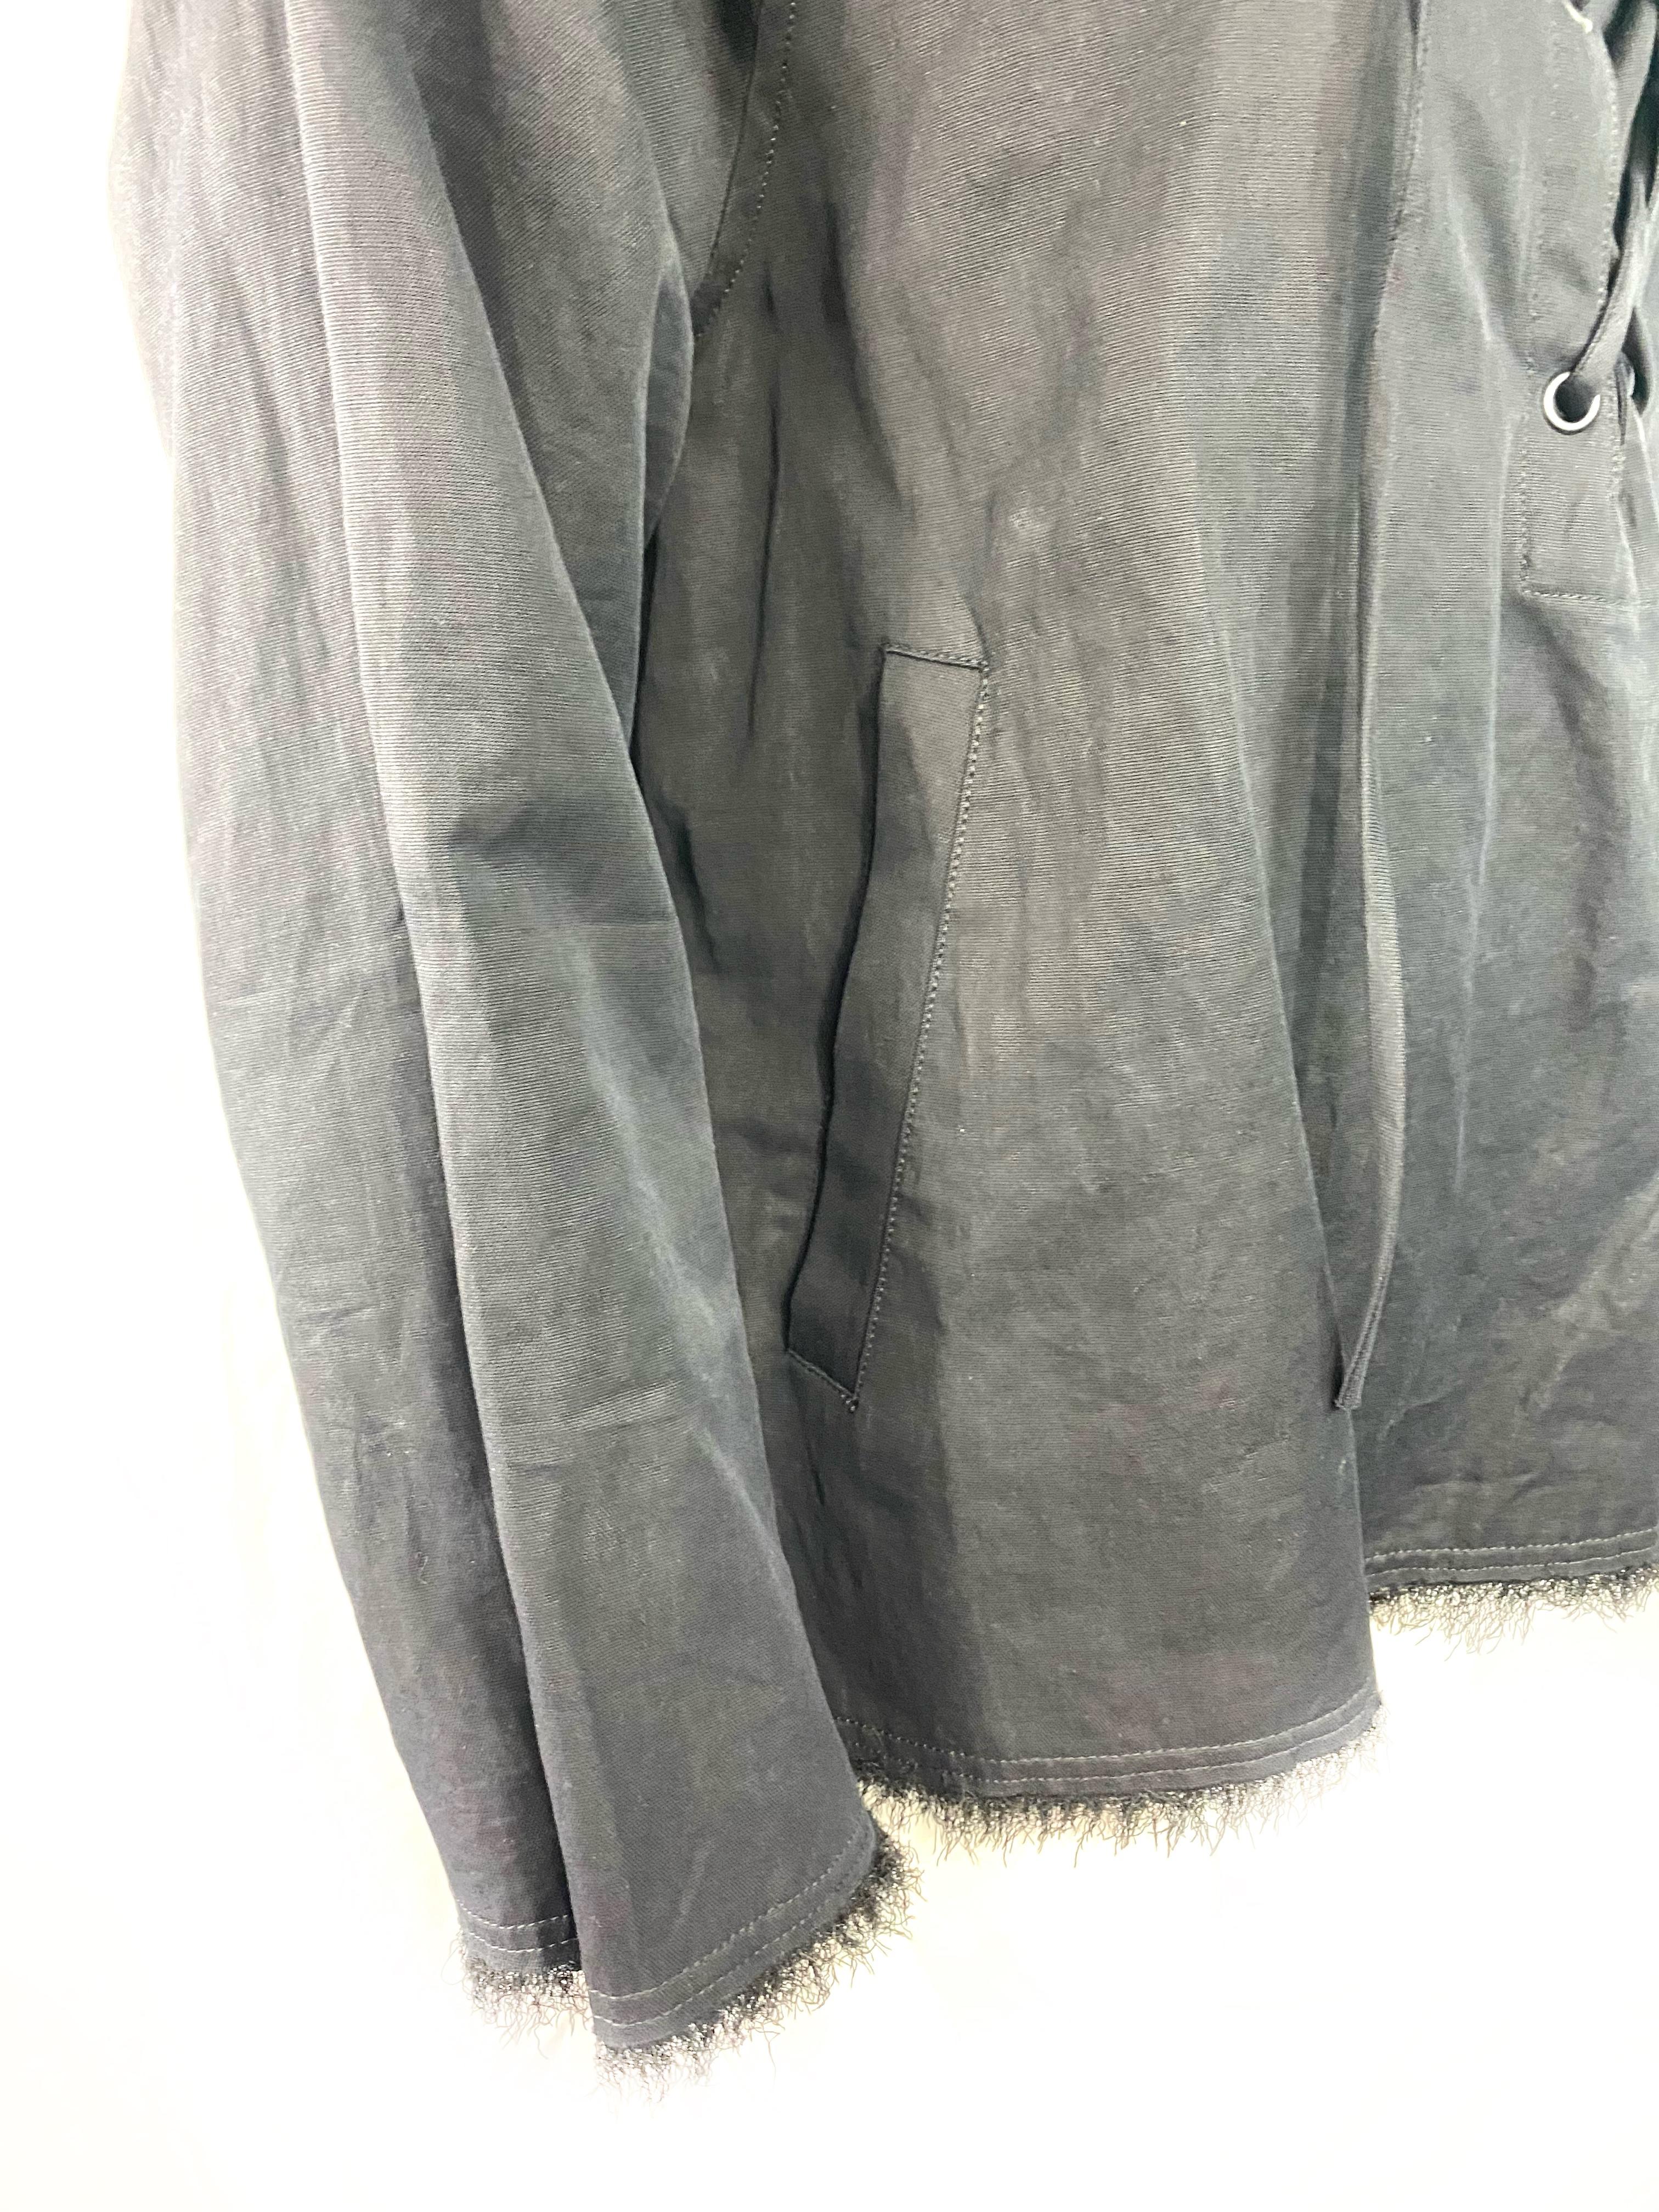 Nili Lotan Black Cotton Top, Size Medium For Sale 1